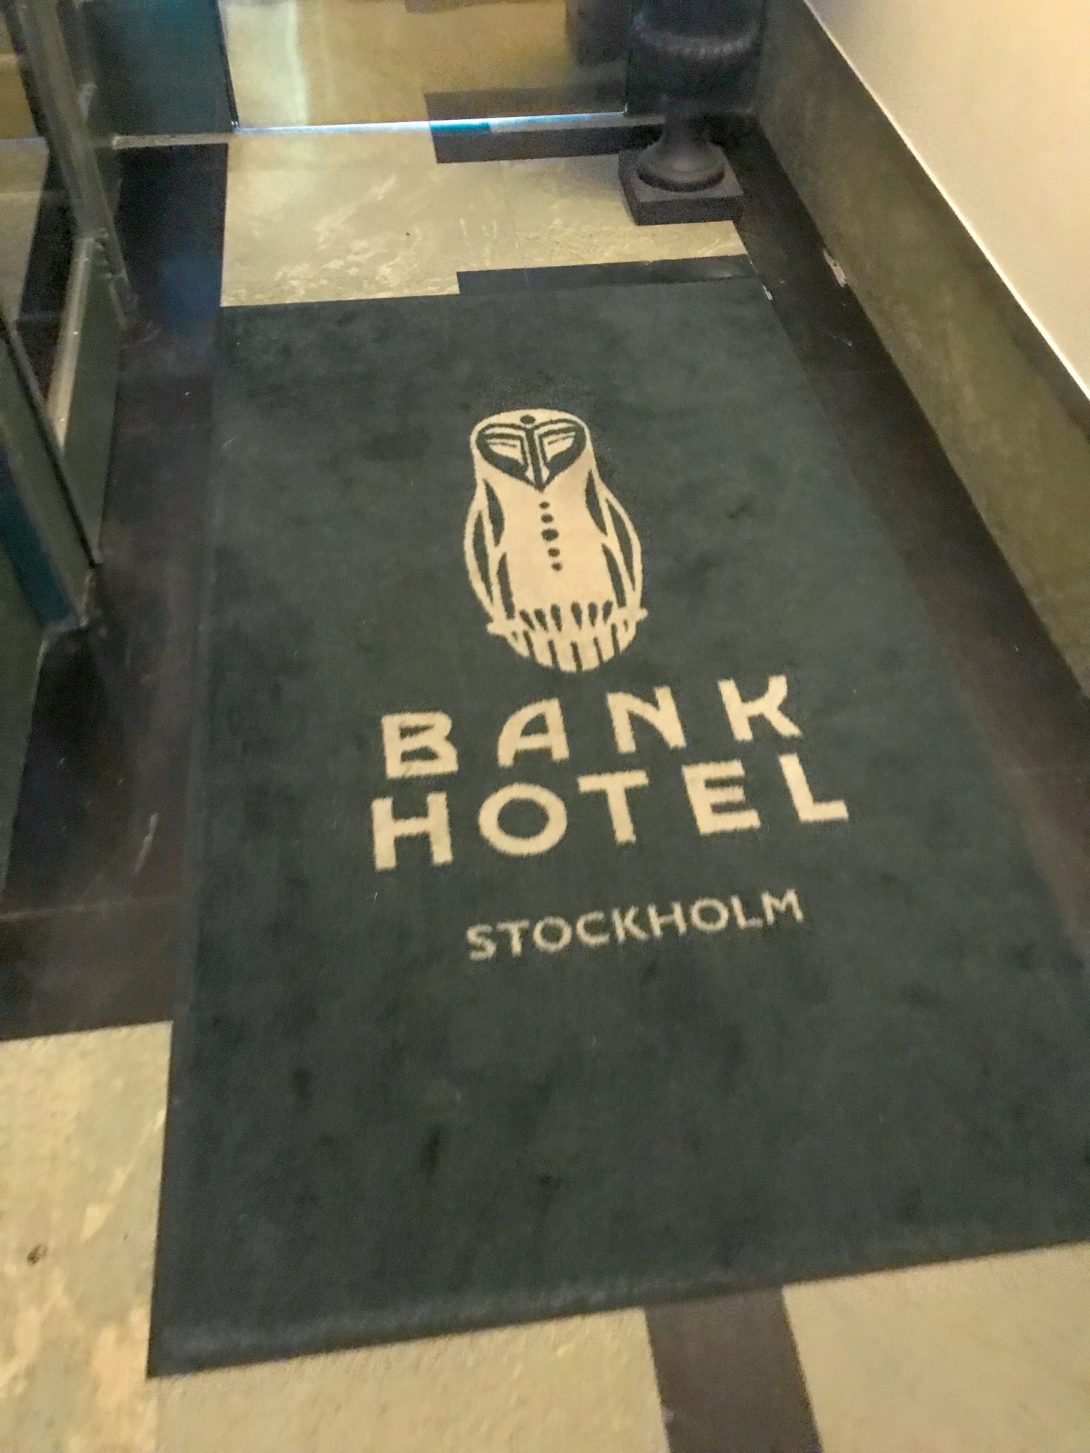 Bank hotel